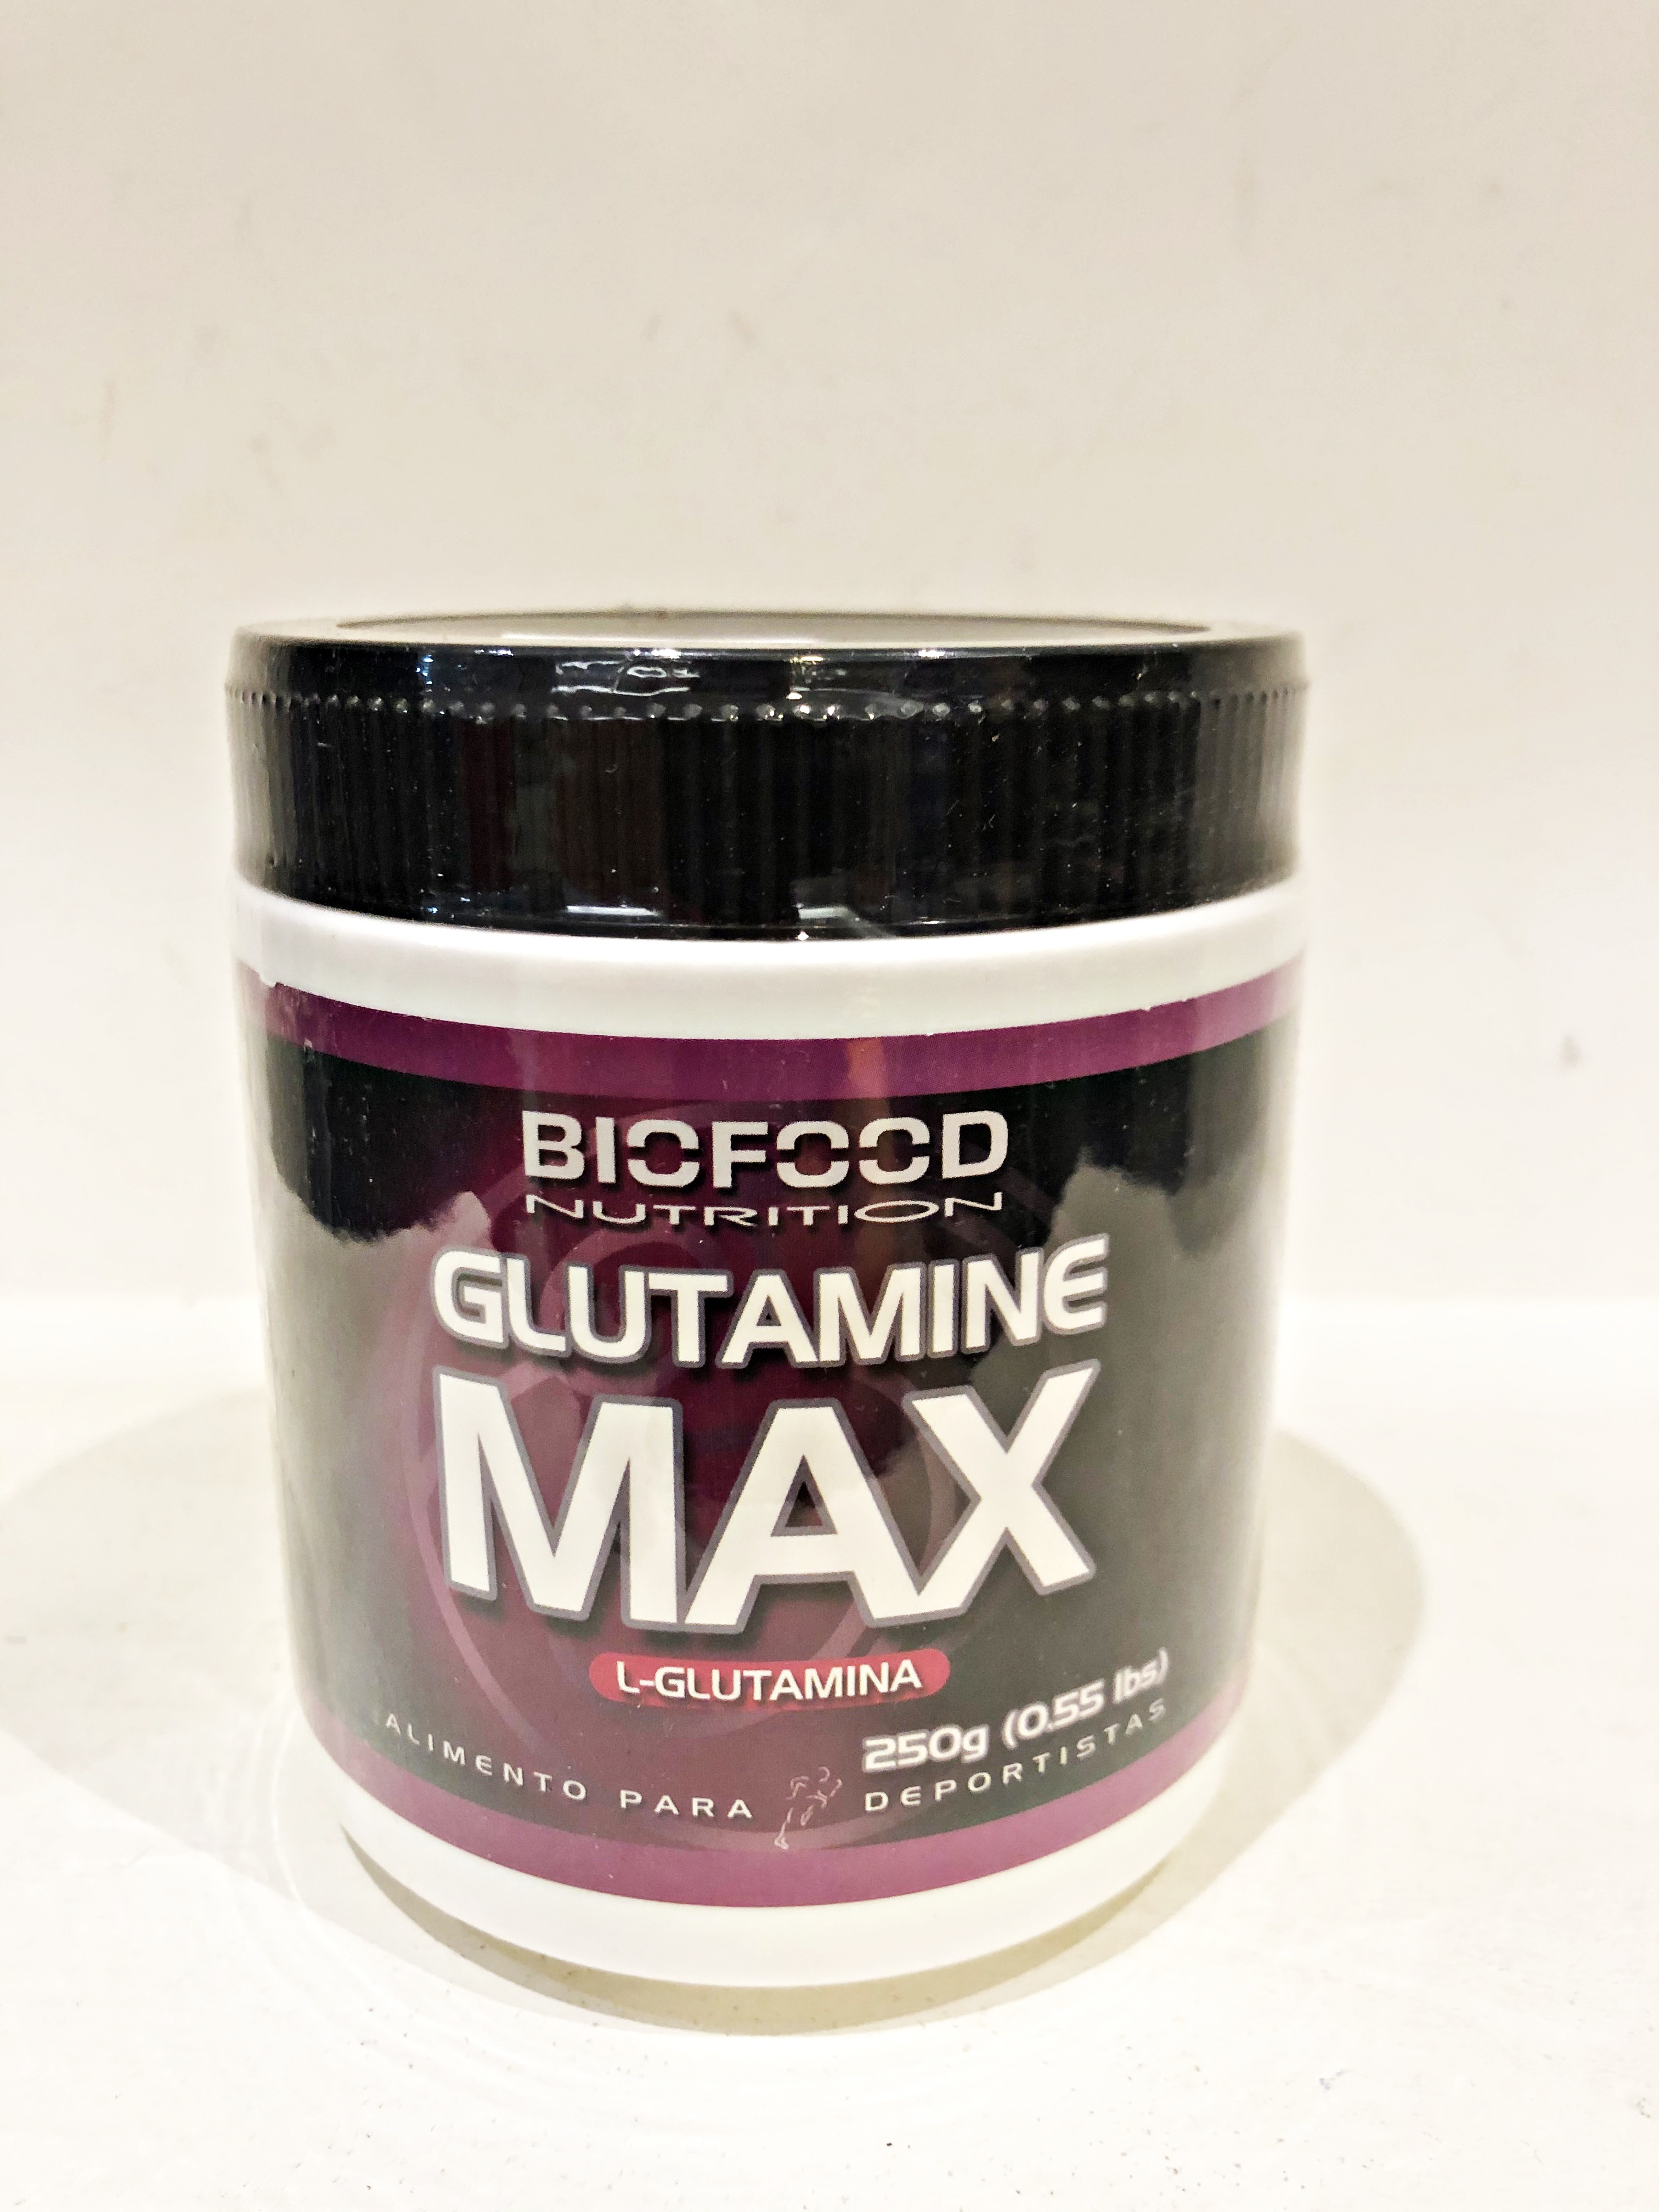 Glutamine Max Biofood